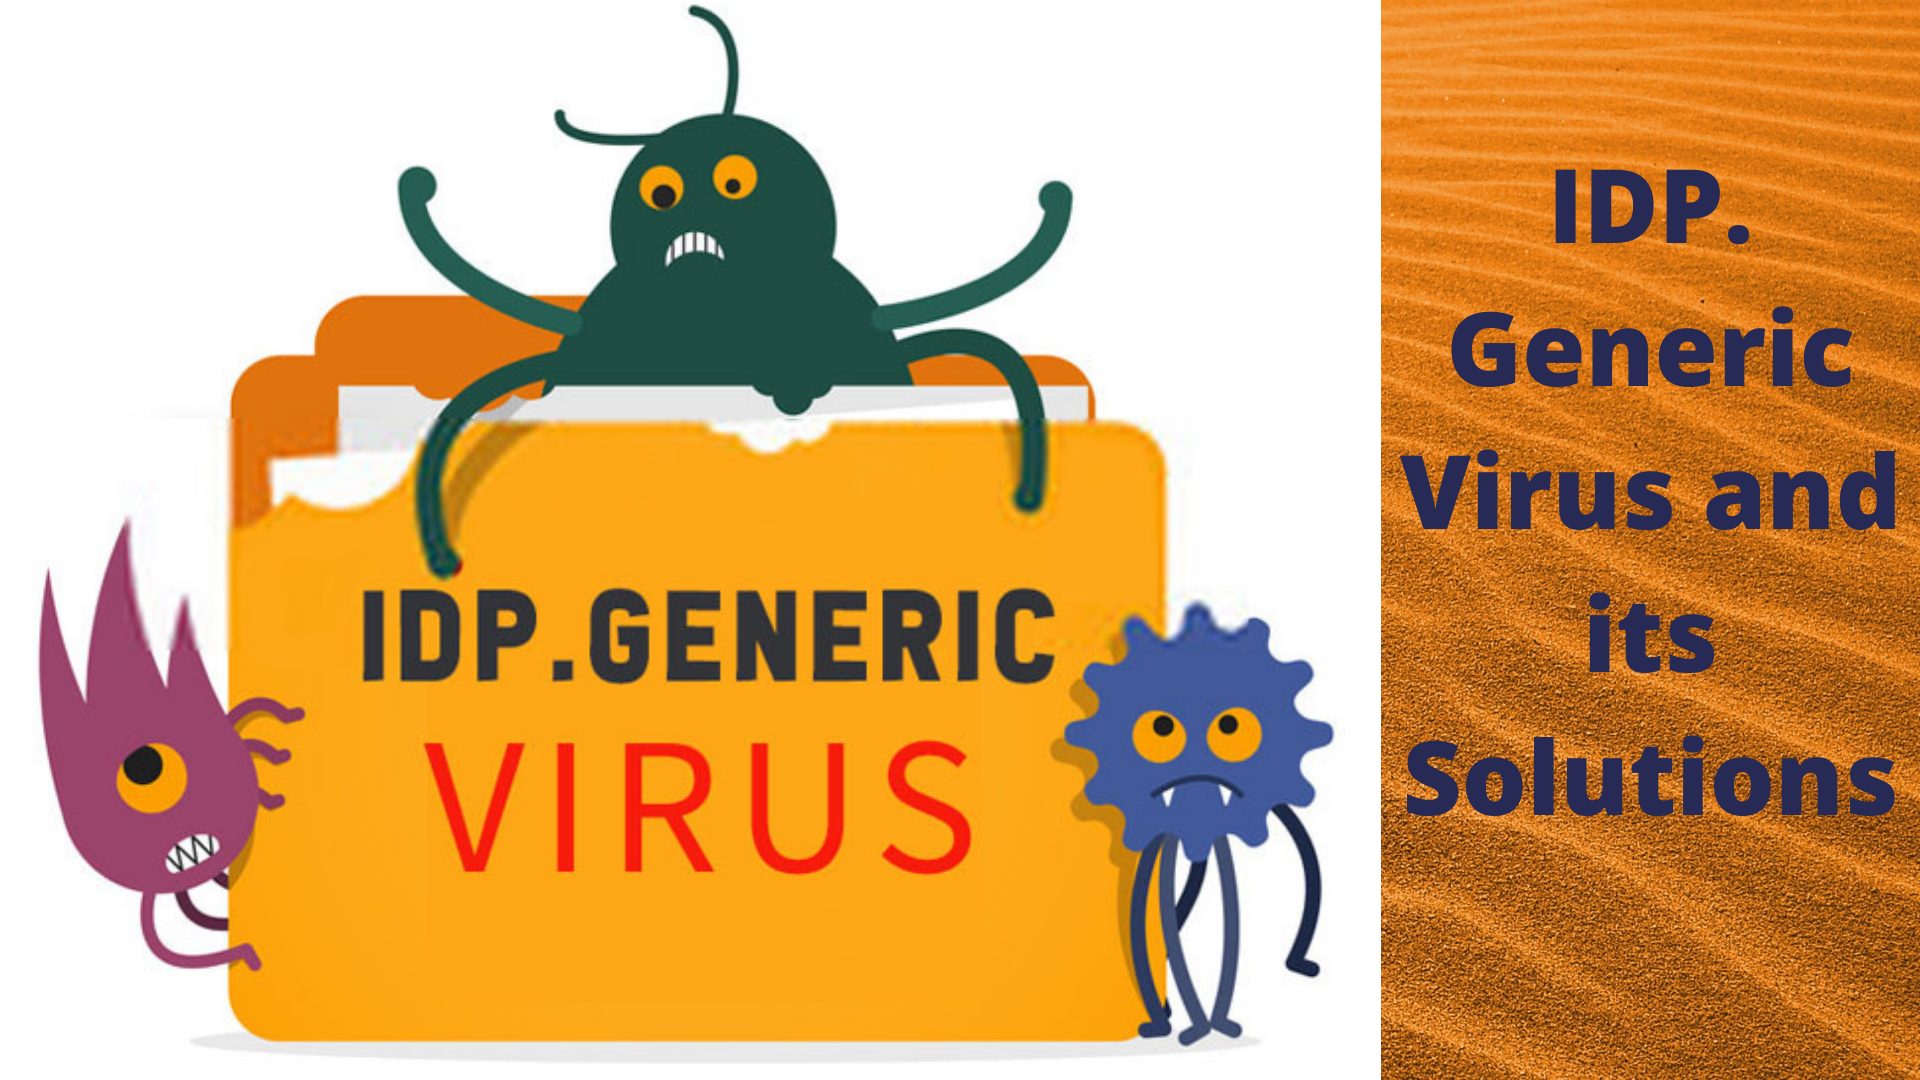 idp.generic virus